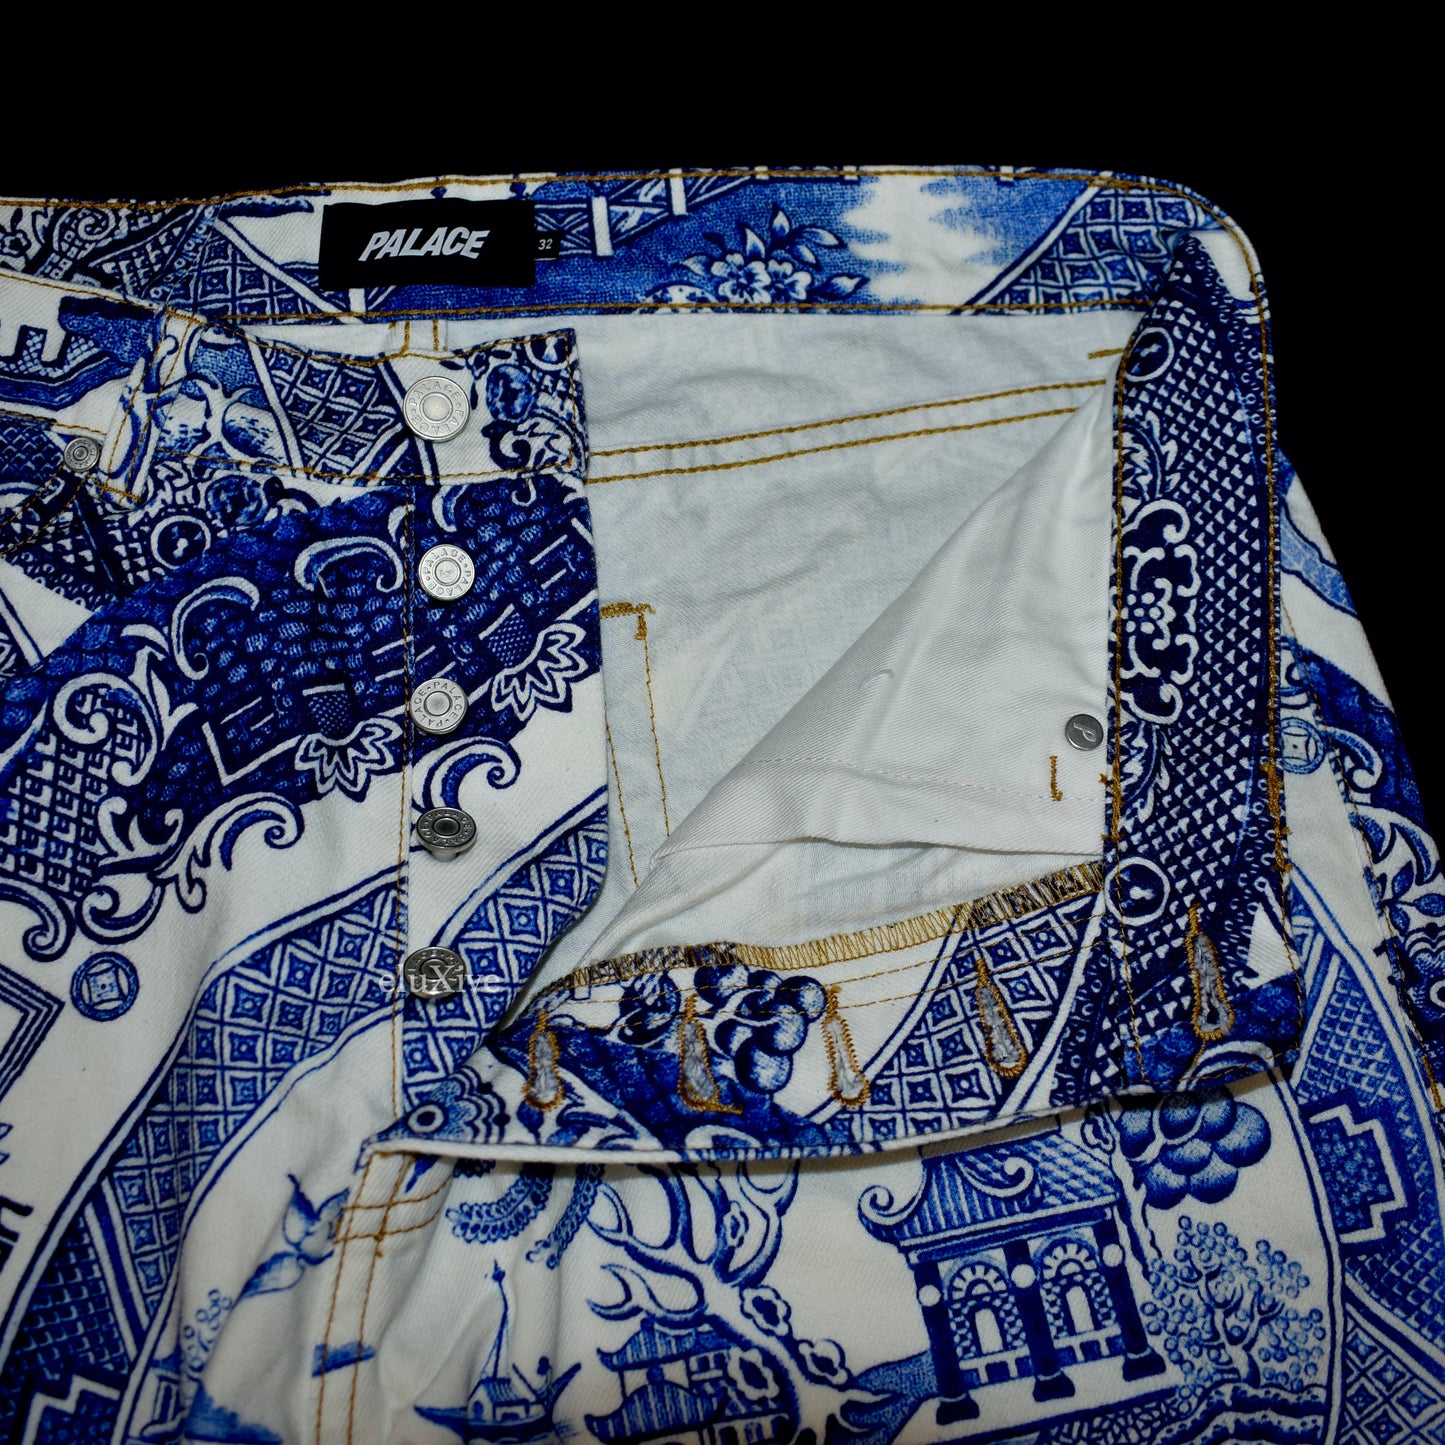 Palace - White / Blue China Plate Print Denim Jeans